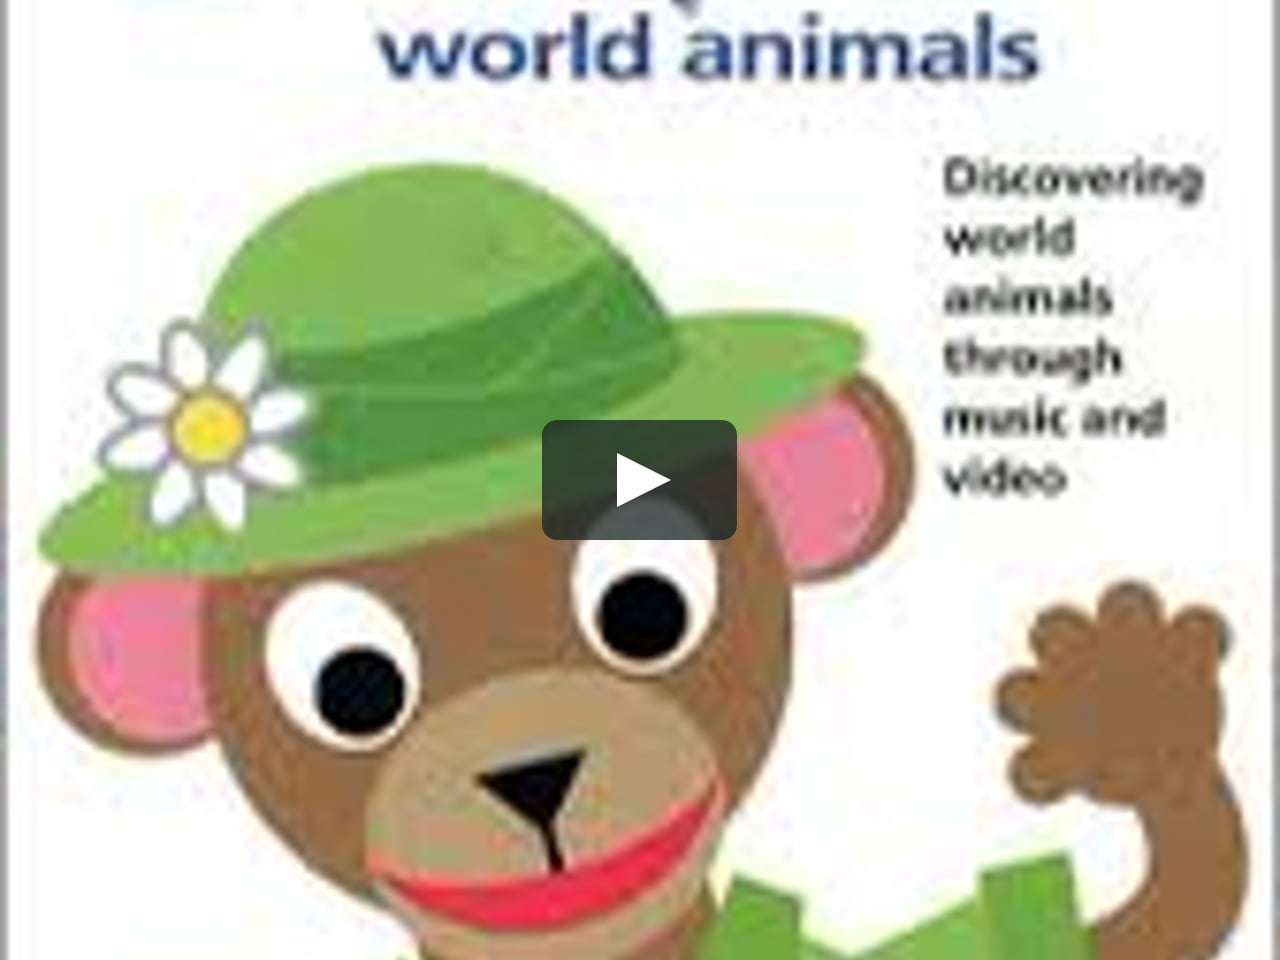 Opening to World Animals 2001 VHS on Vimeo